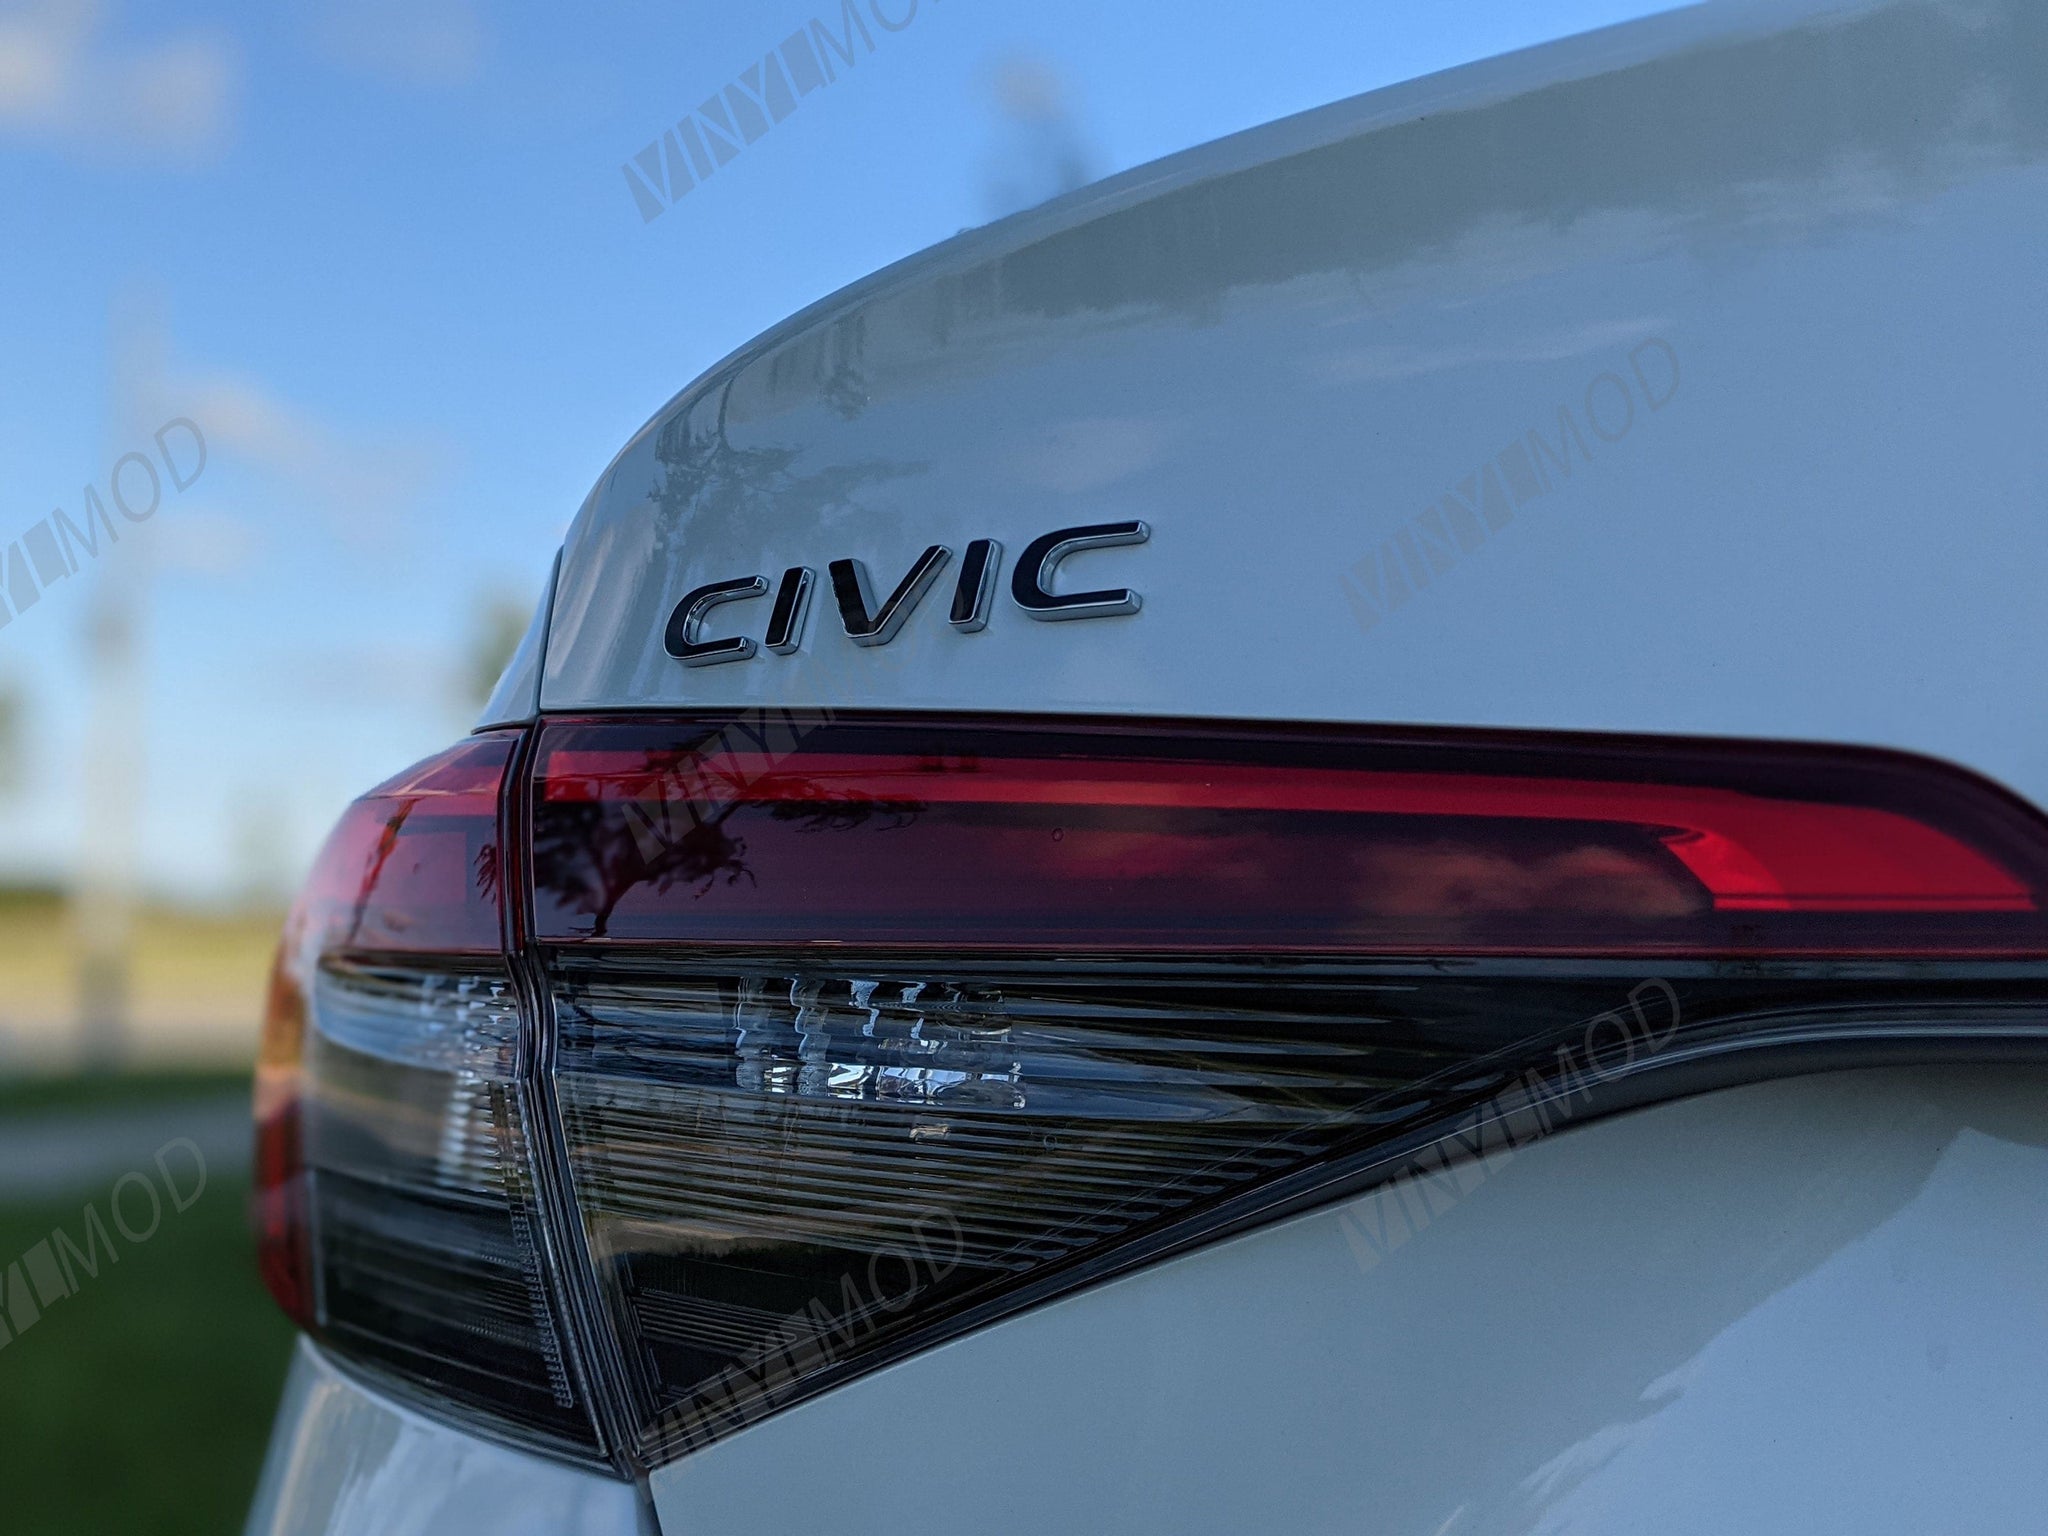 2021+ (11th Gen) Honda Civic - Rear Civic VinylMod Overlay